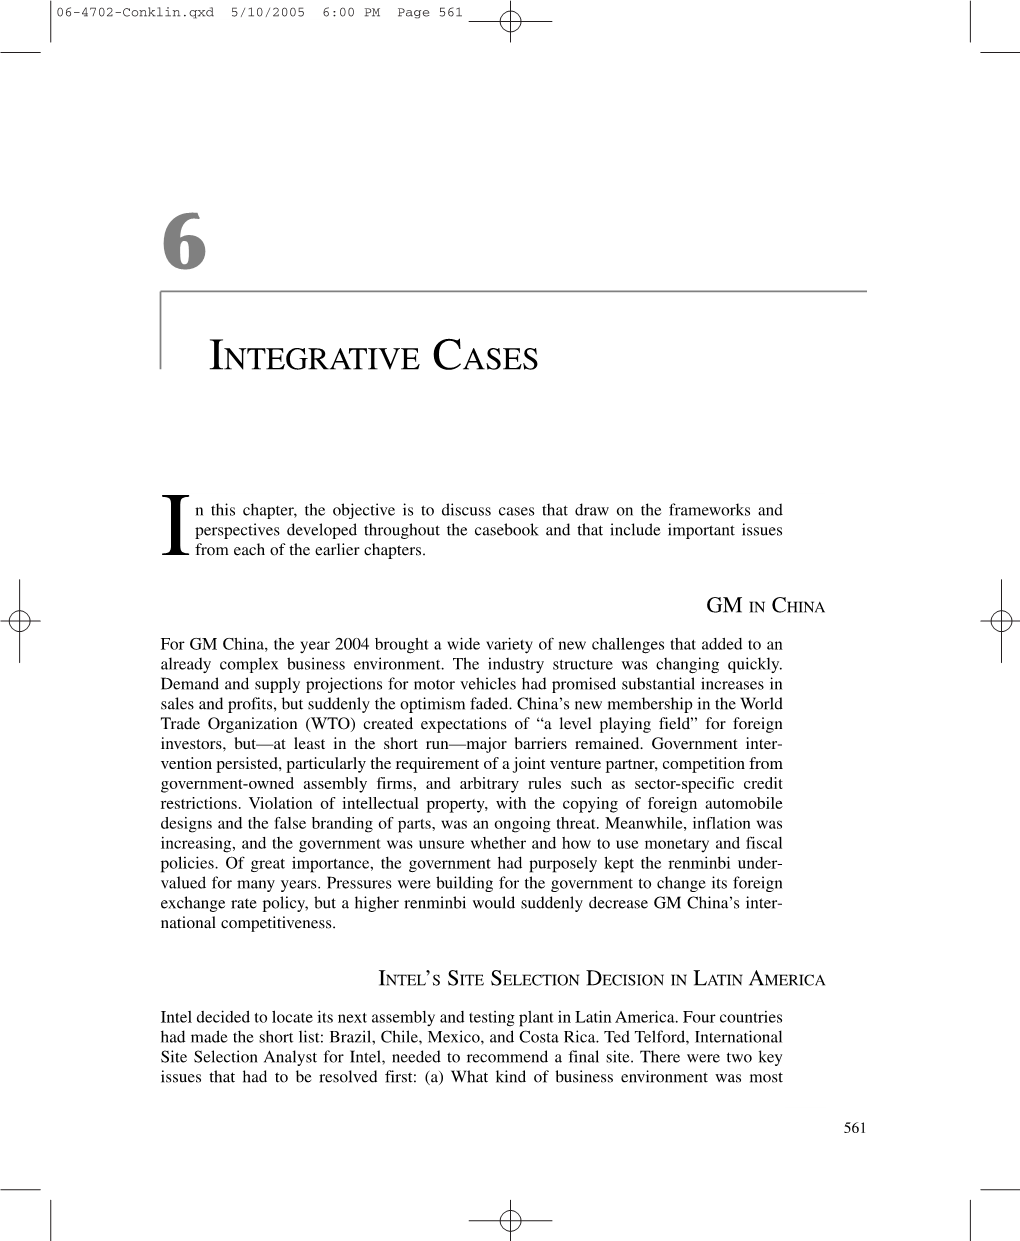 Integrative Cases